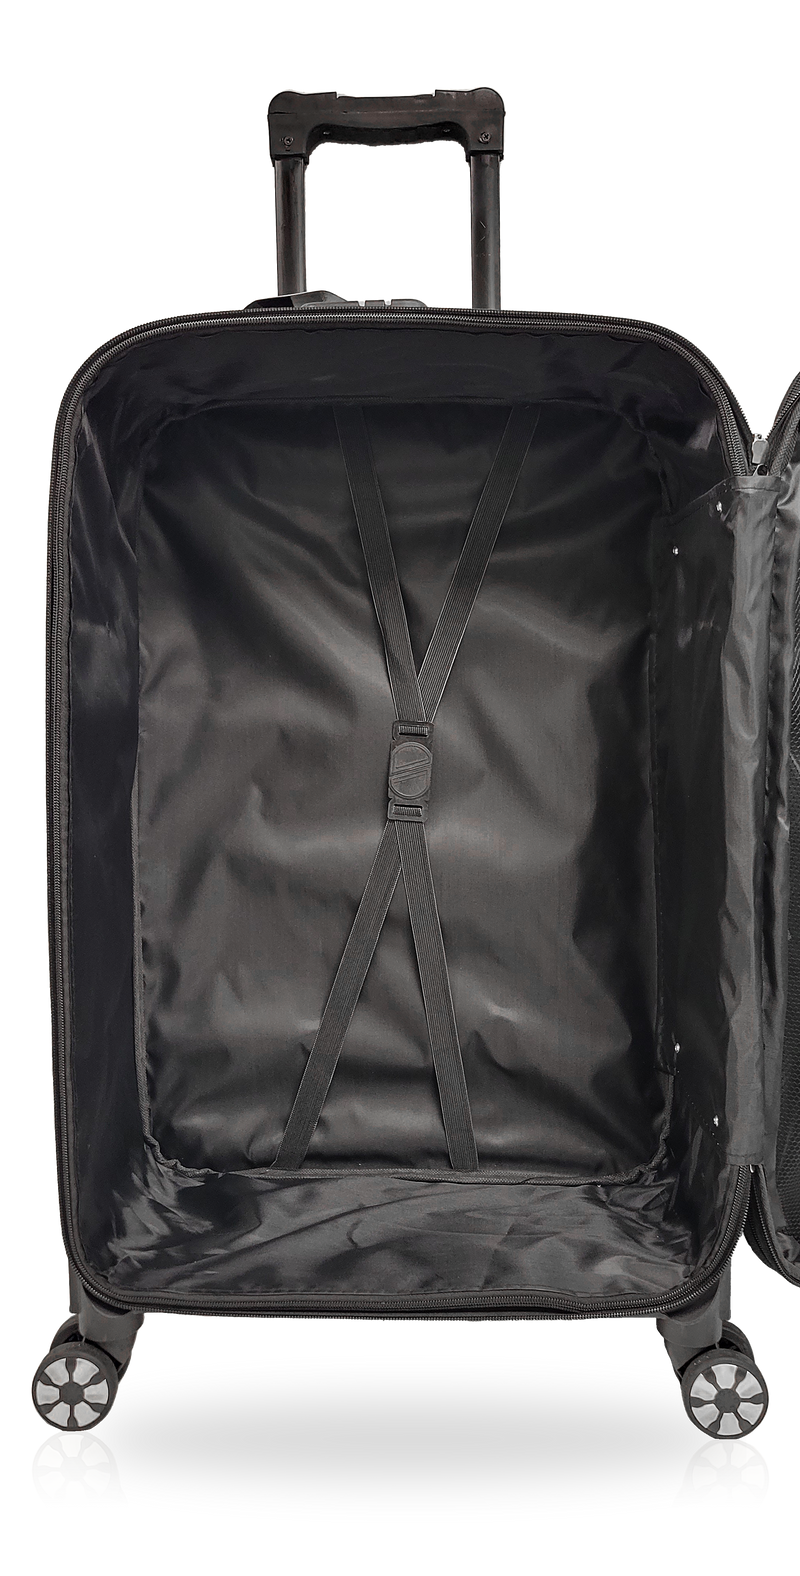 TOSCANO Aiutante 23-inch Lightweight Luggage Suitcase